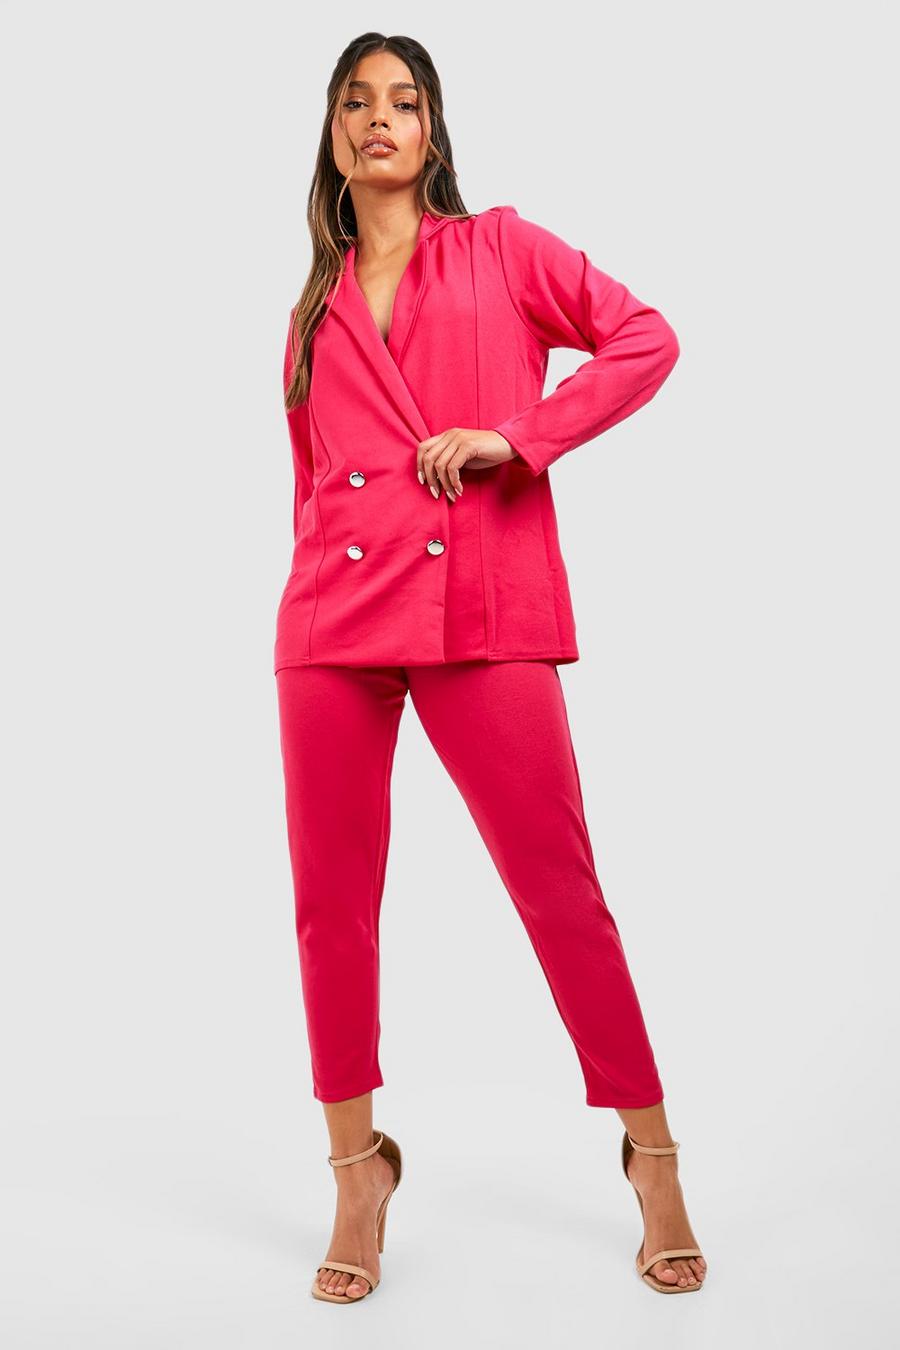 Hot pink סט חליפה בלייזר עם סגירה בהצלבה ומכנסיים